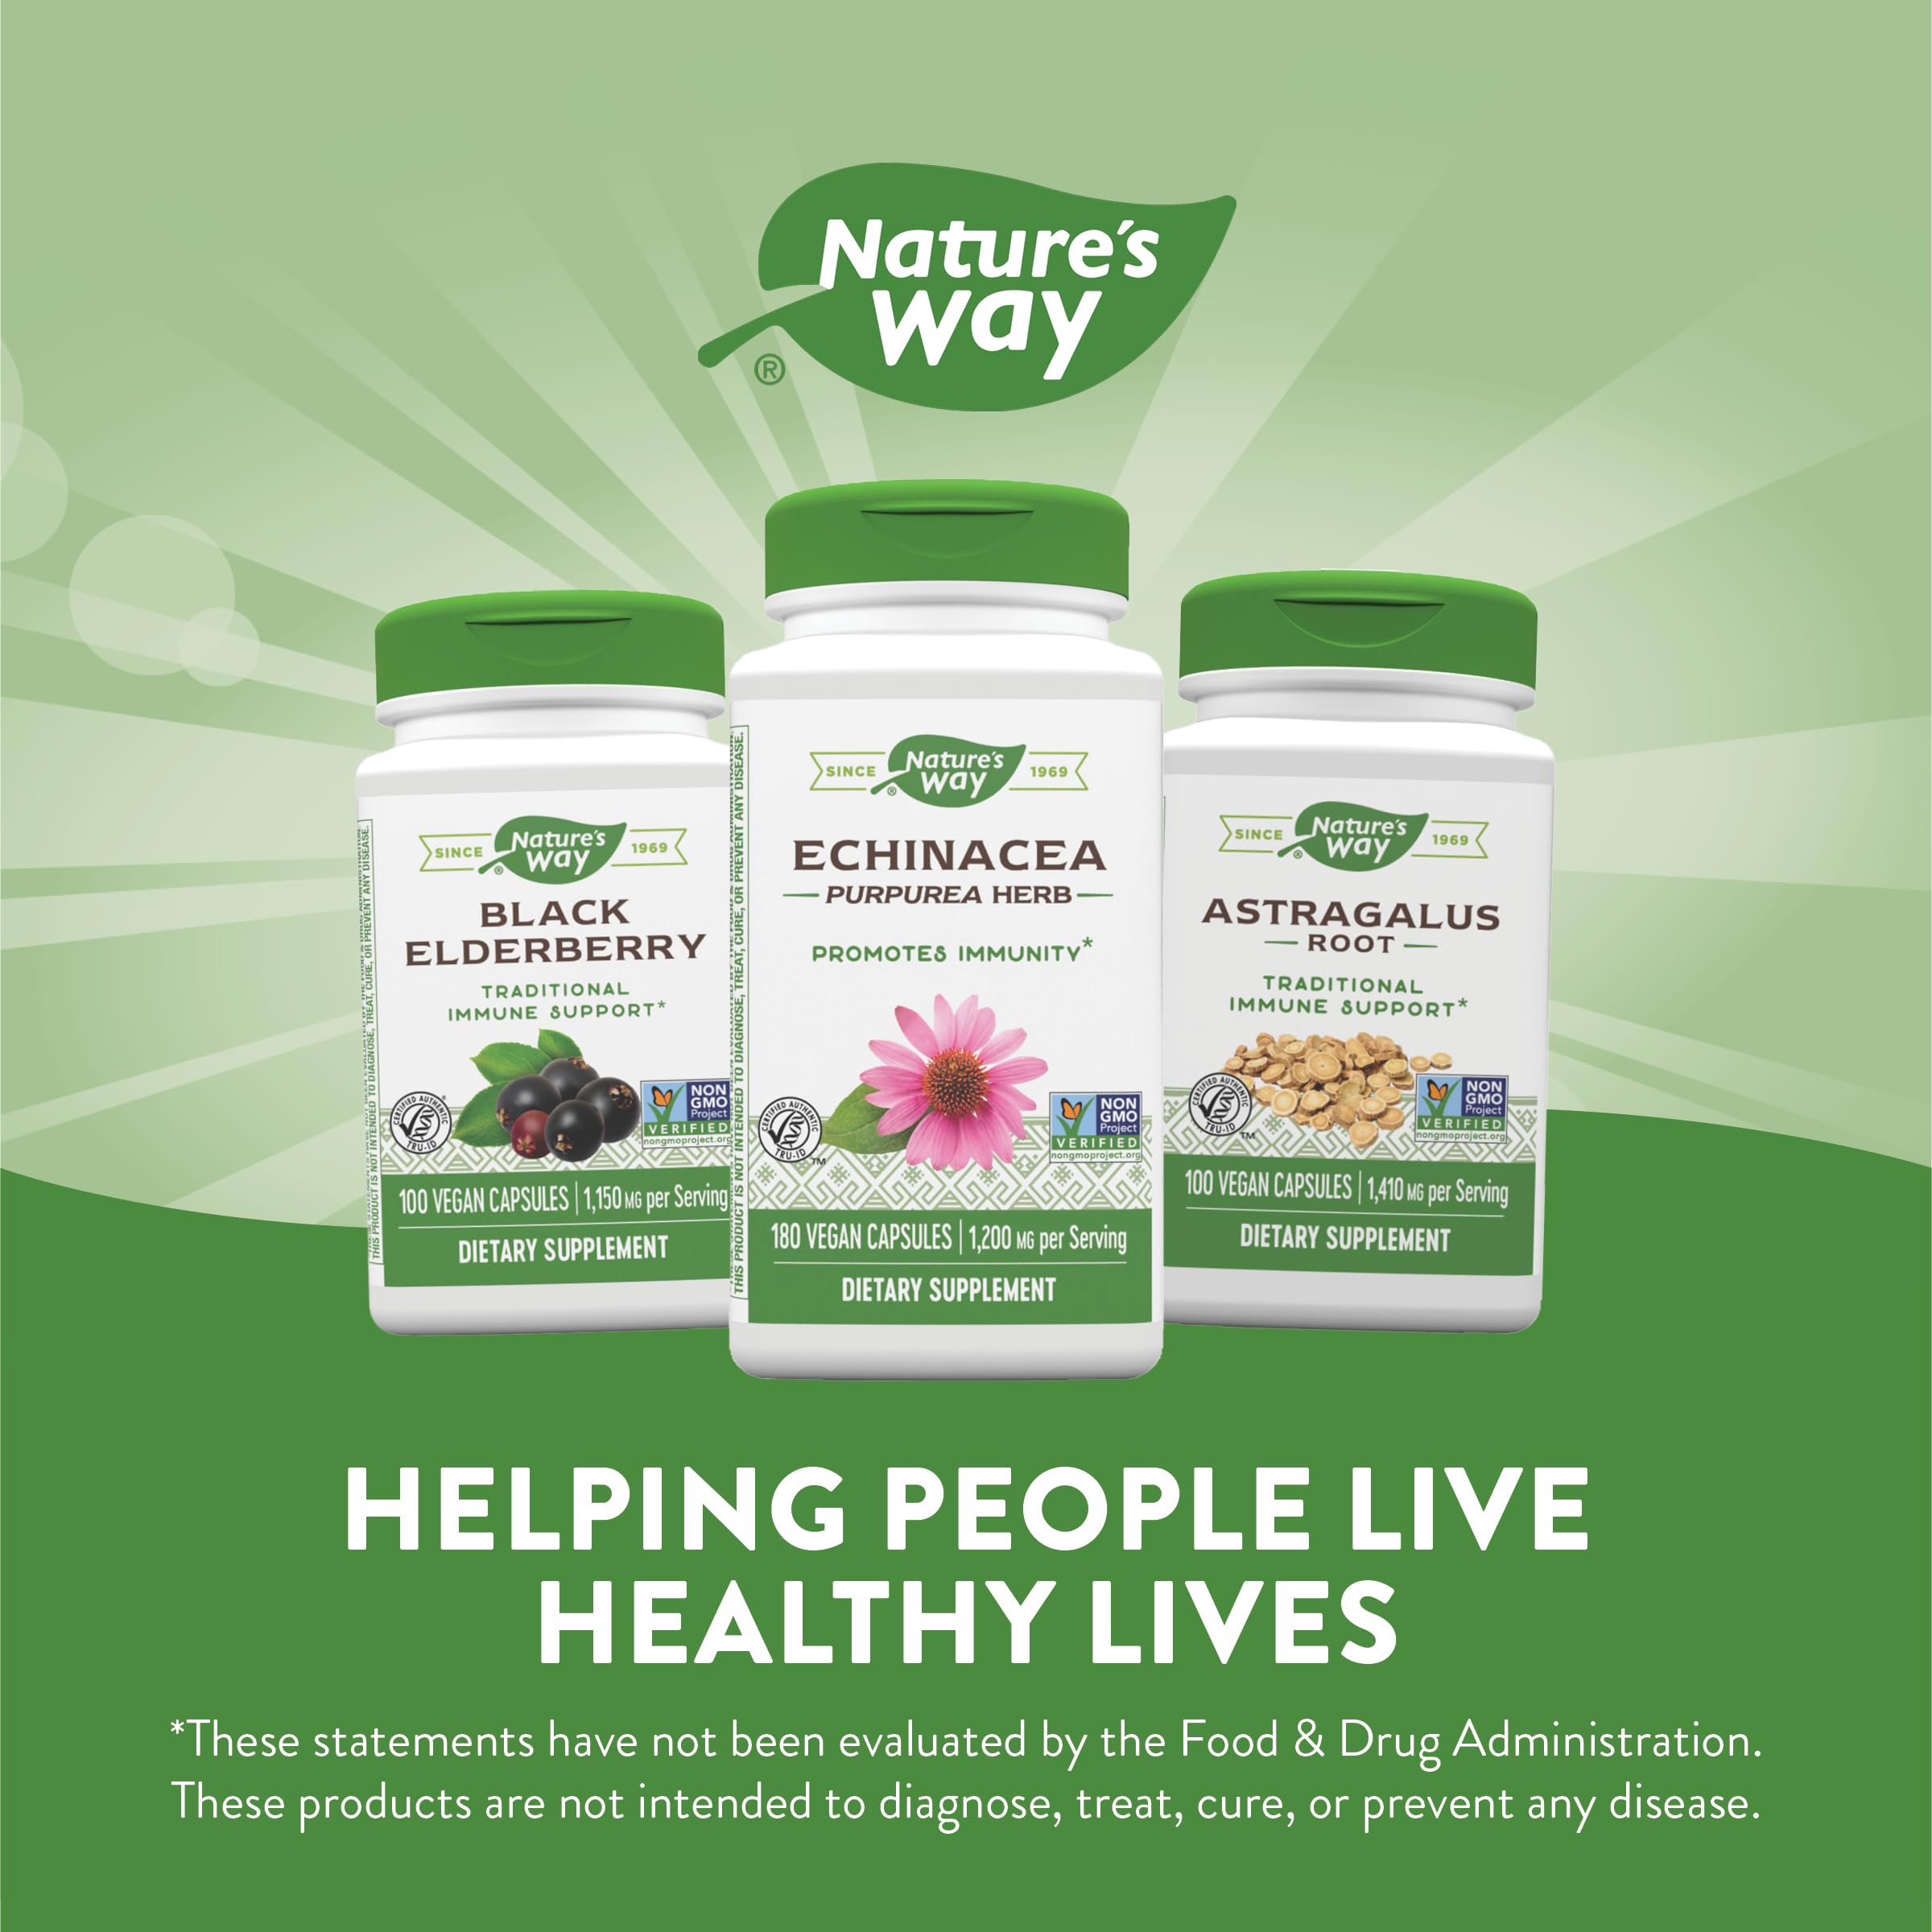 Nature's Way Echinacea Purpurea Herb, 1,200 mg per serving, 180 VCaps